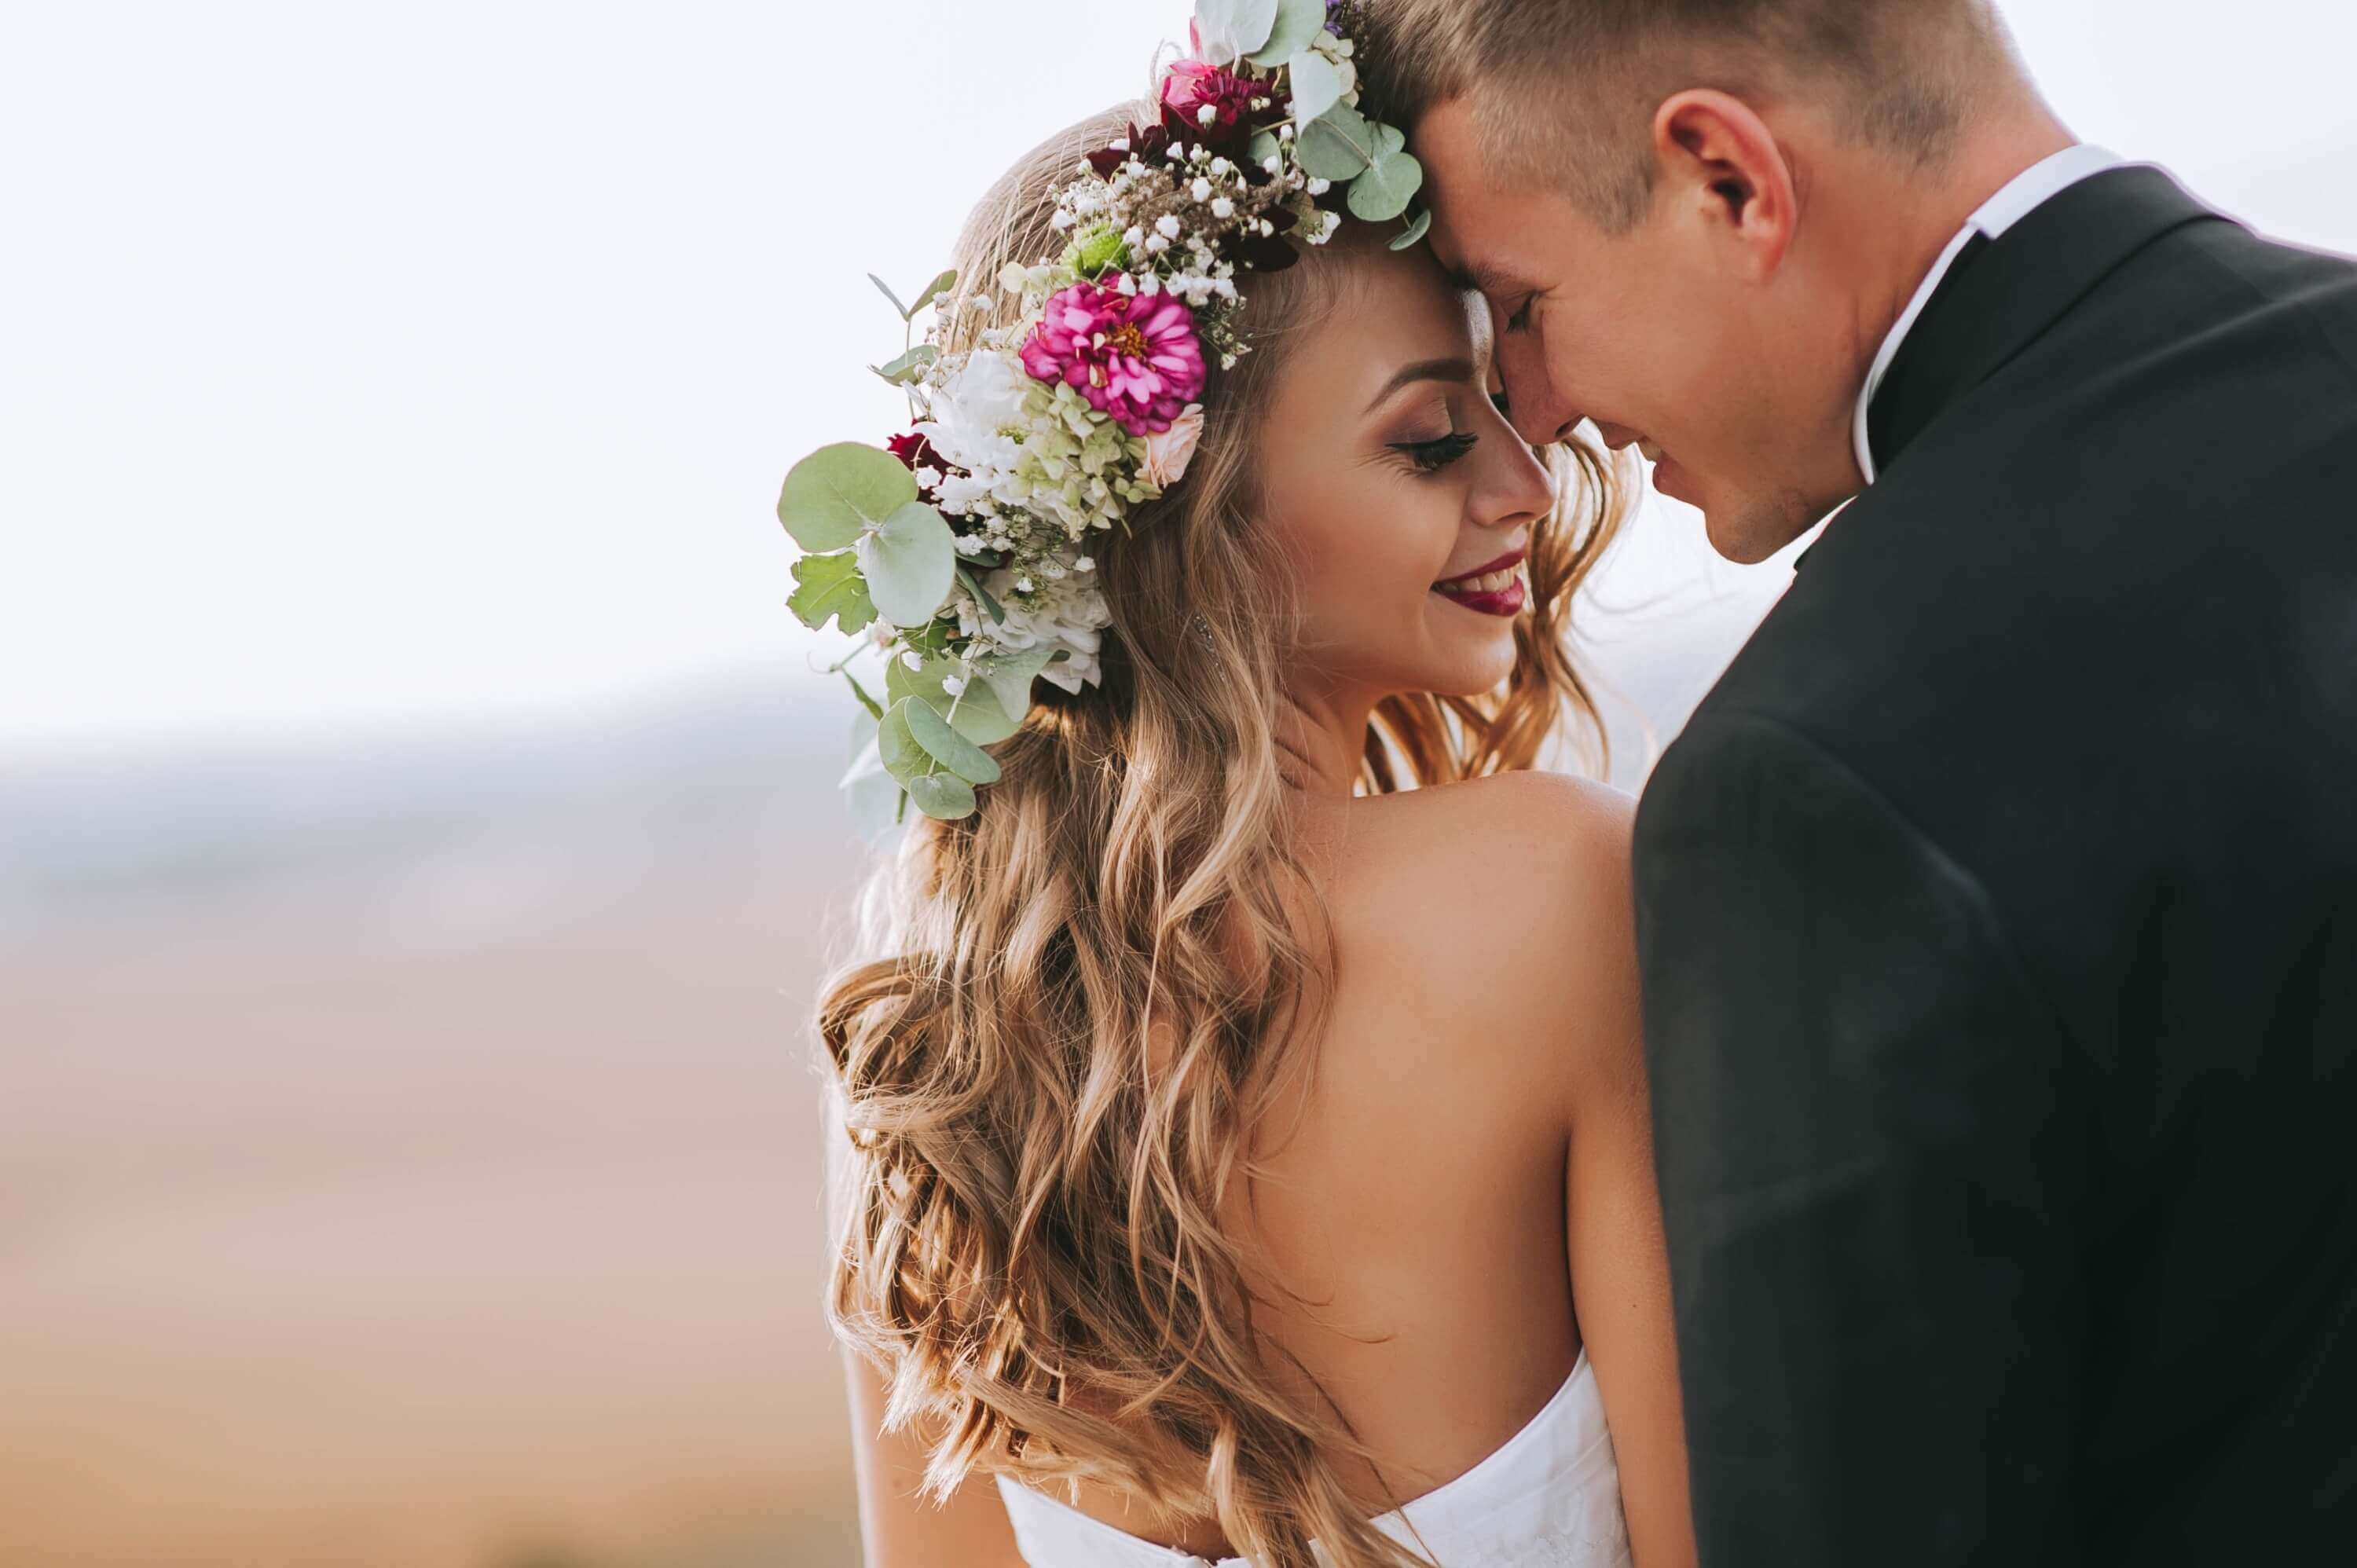 Bride smiling wearing a floral crown cuddling with groom